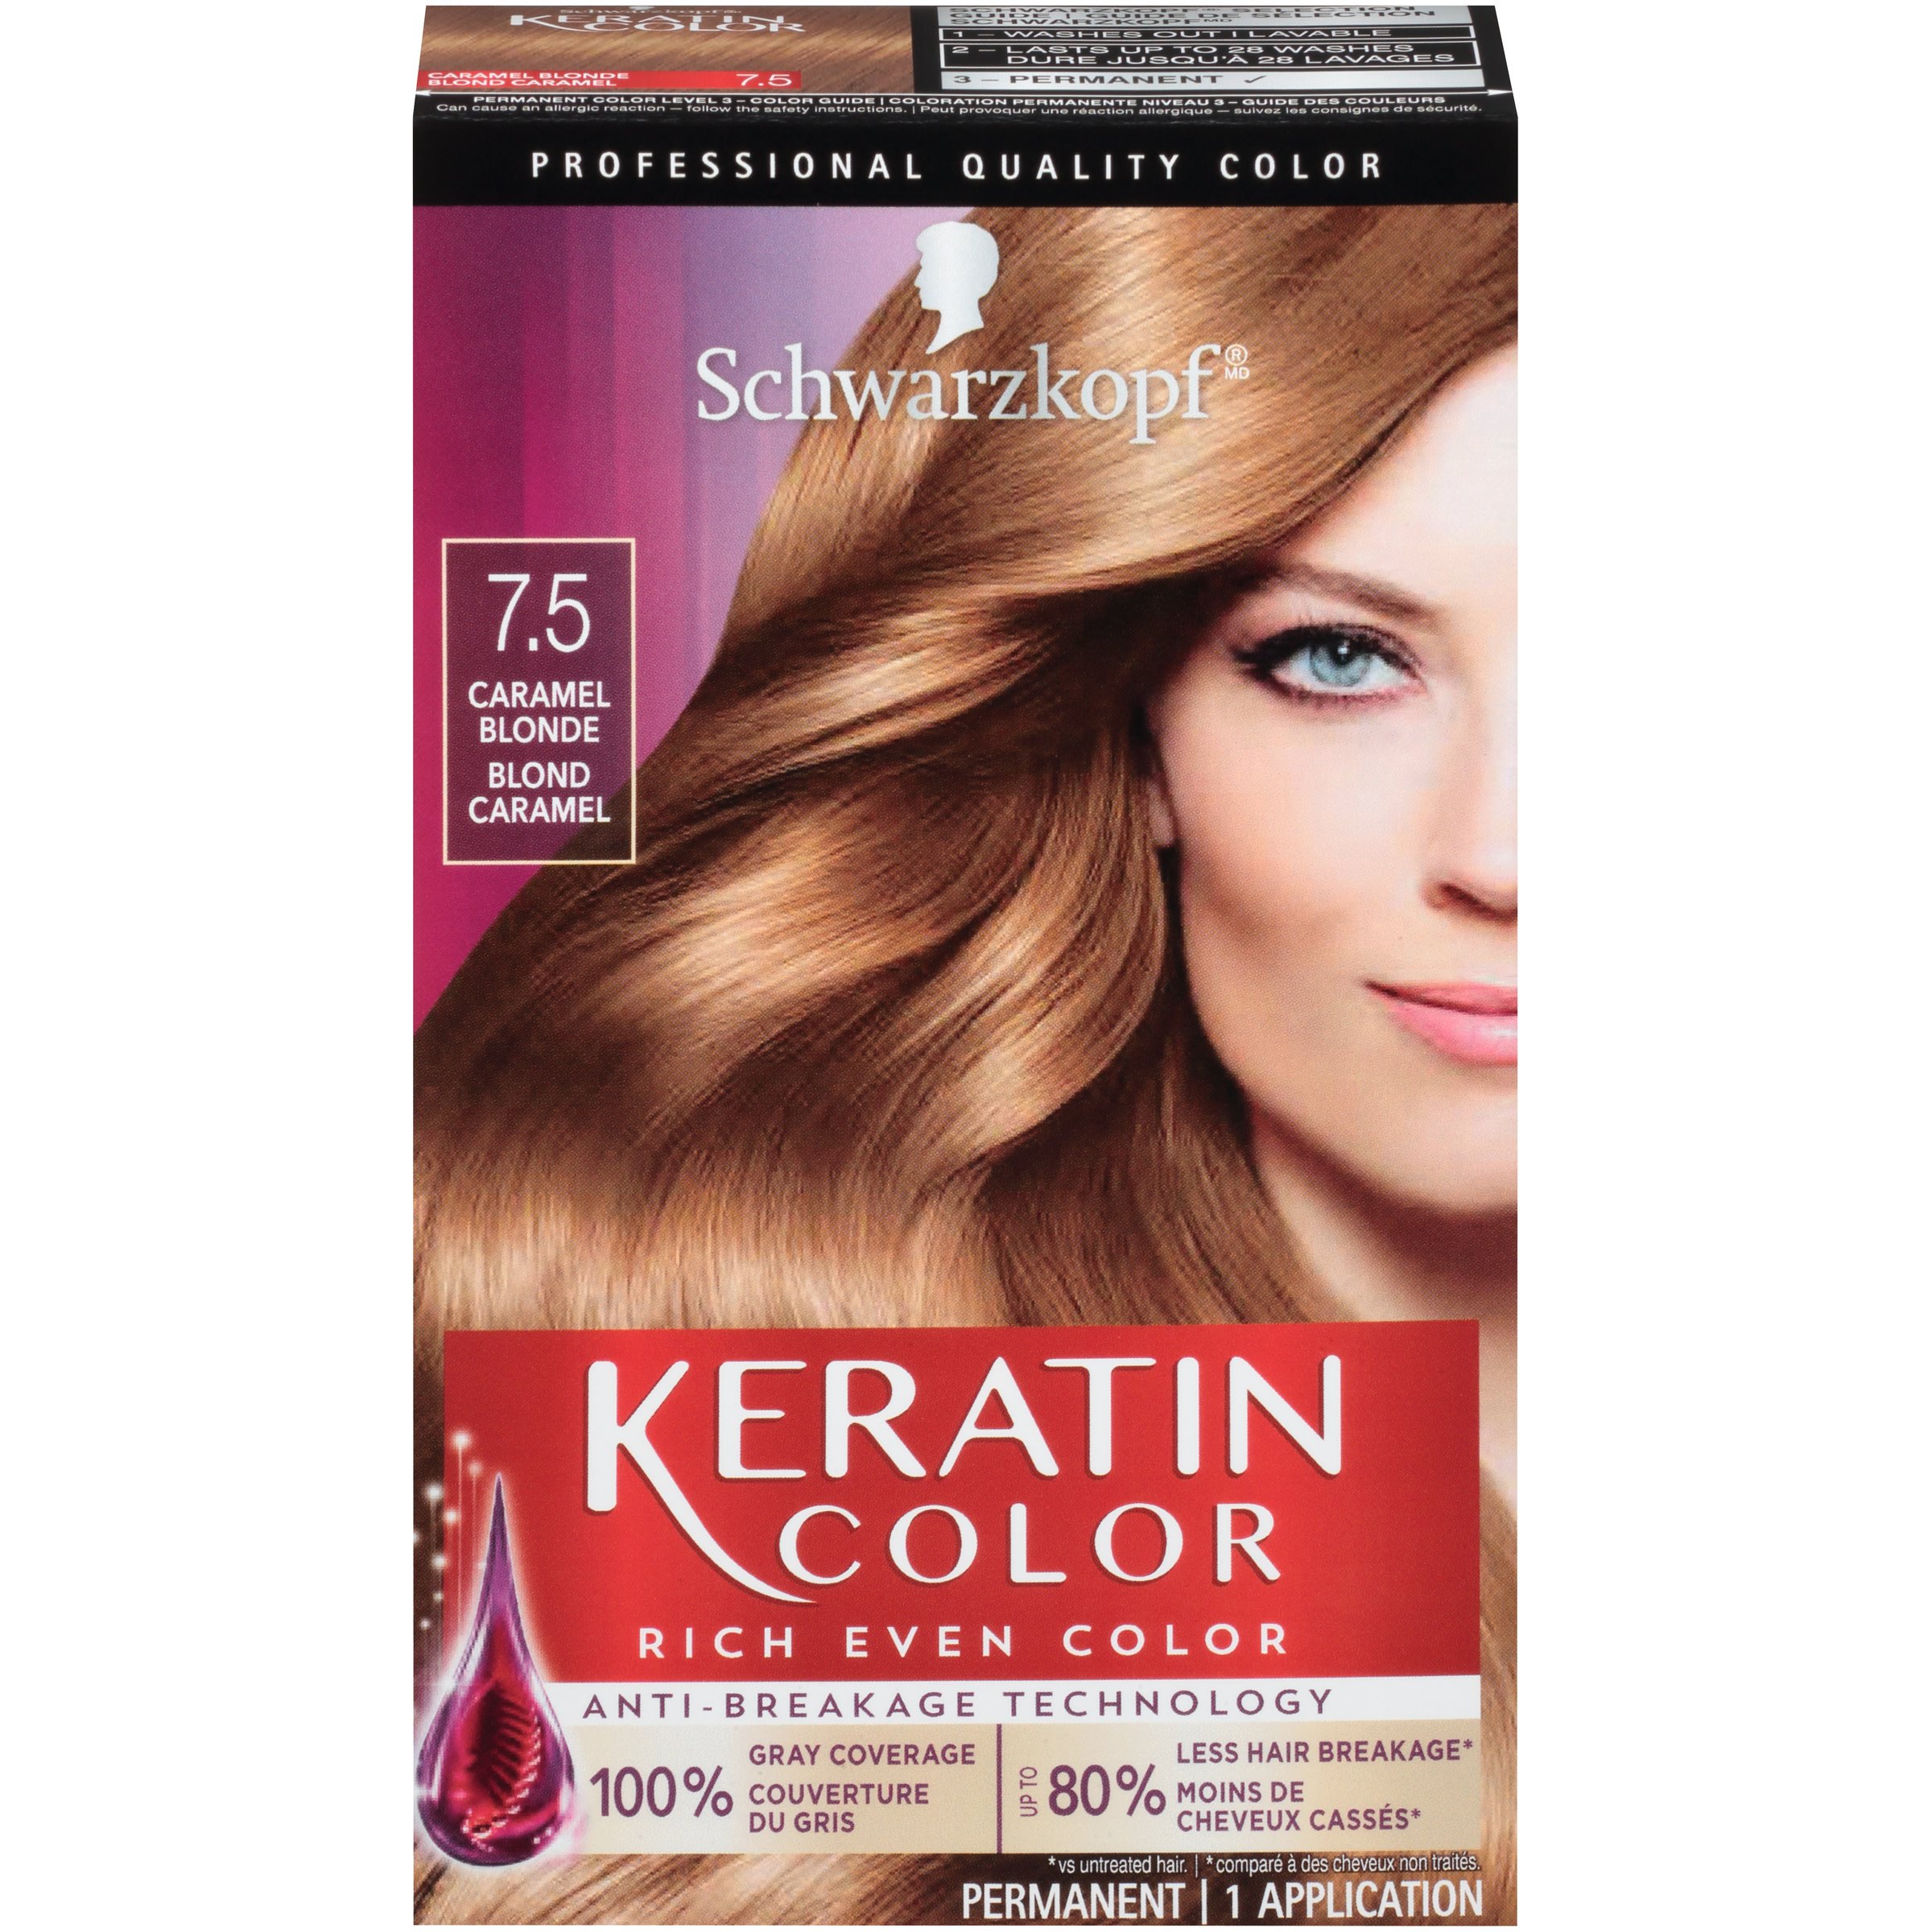 Duplicaat Tact journalist Schwarzkopf Keratin Color 7.5 Caramel Blonde Anti Age Hair Color - Shop  Hair Care at H-E-B